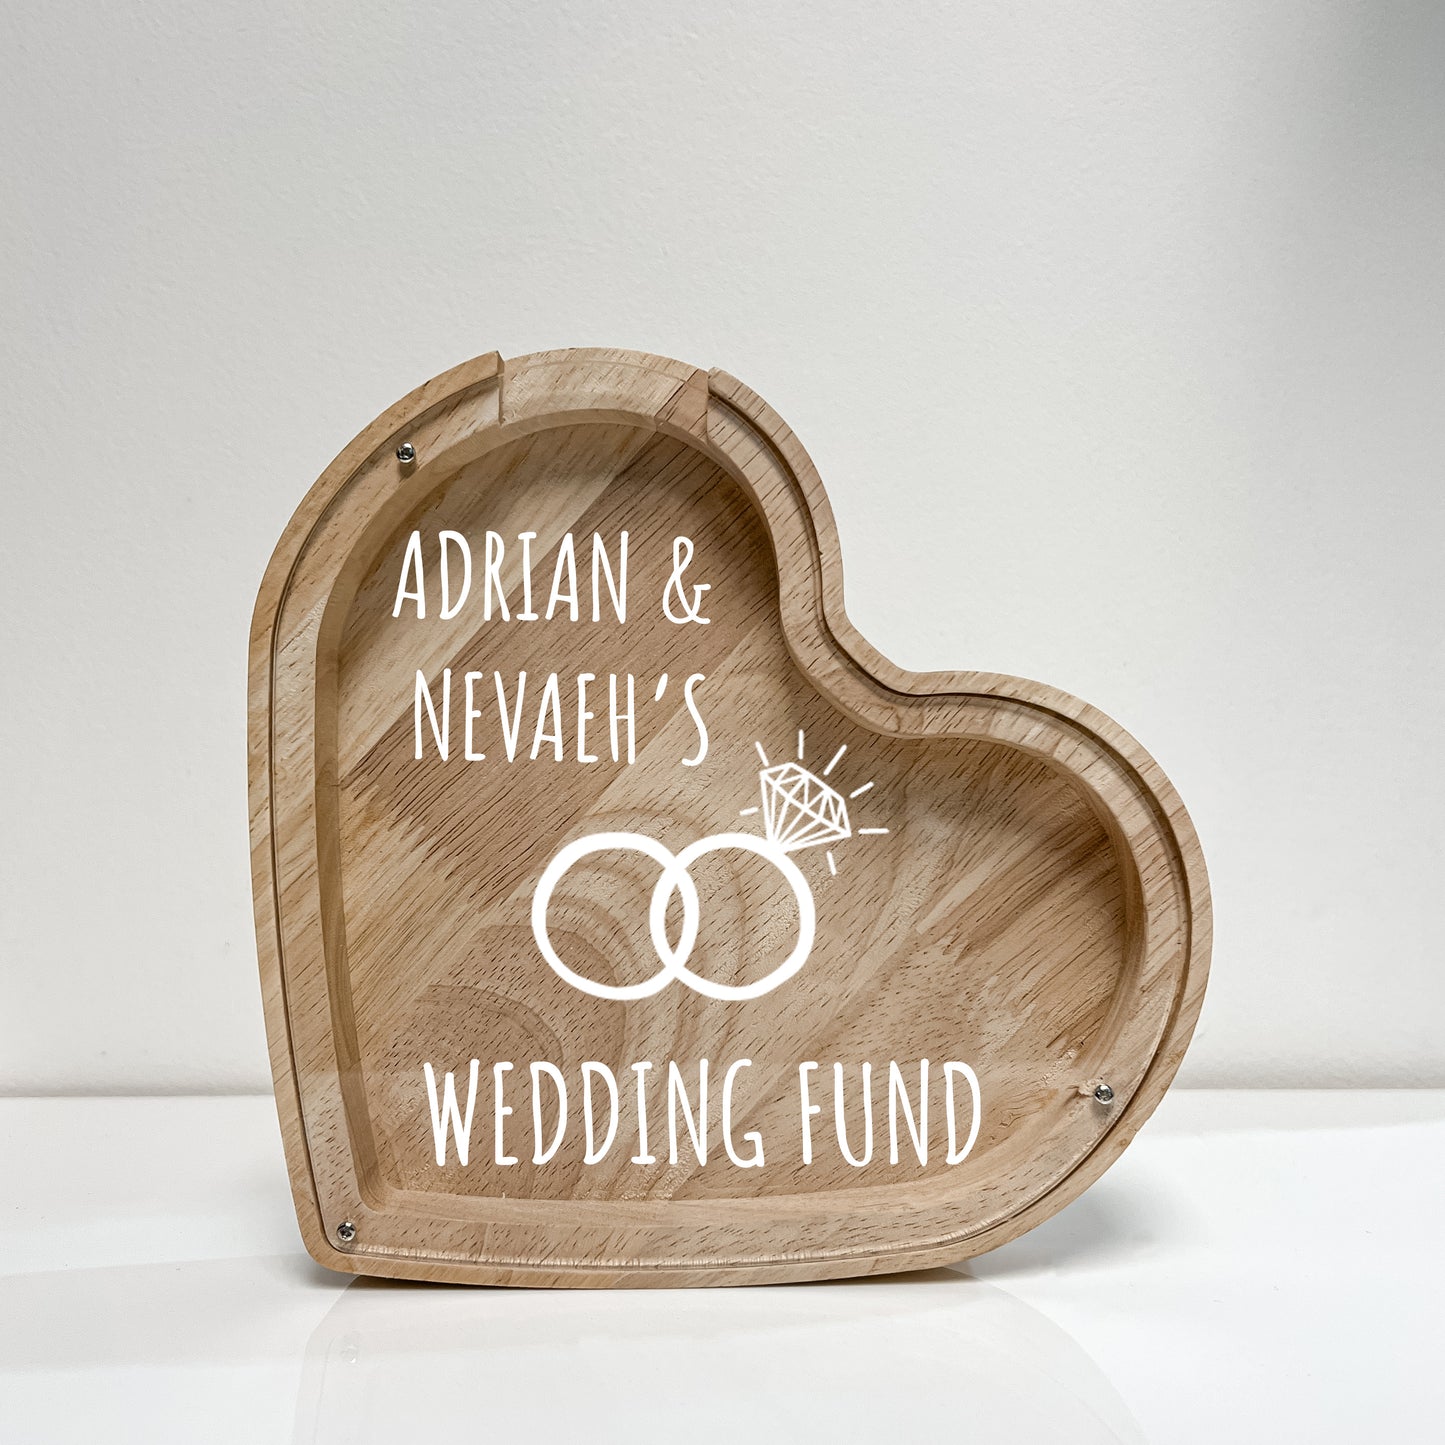 Personalized Wedding Fund Savings Banks